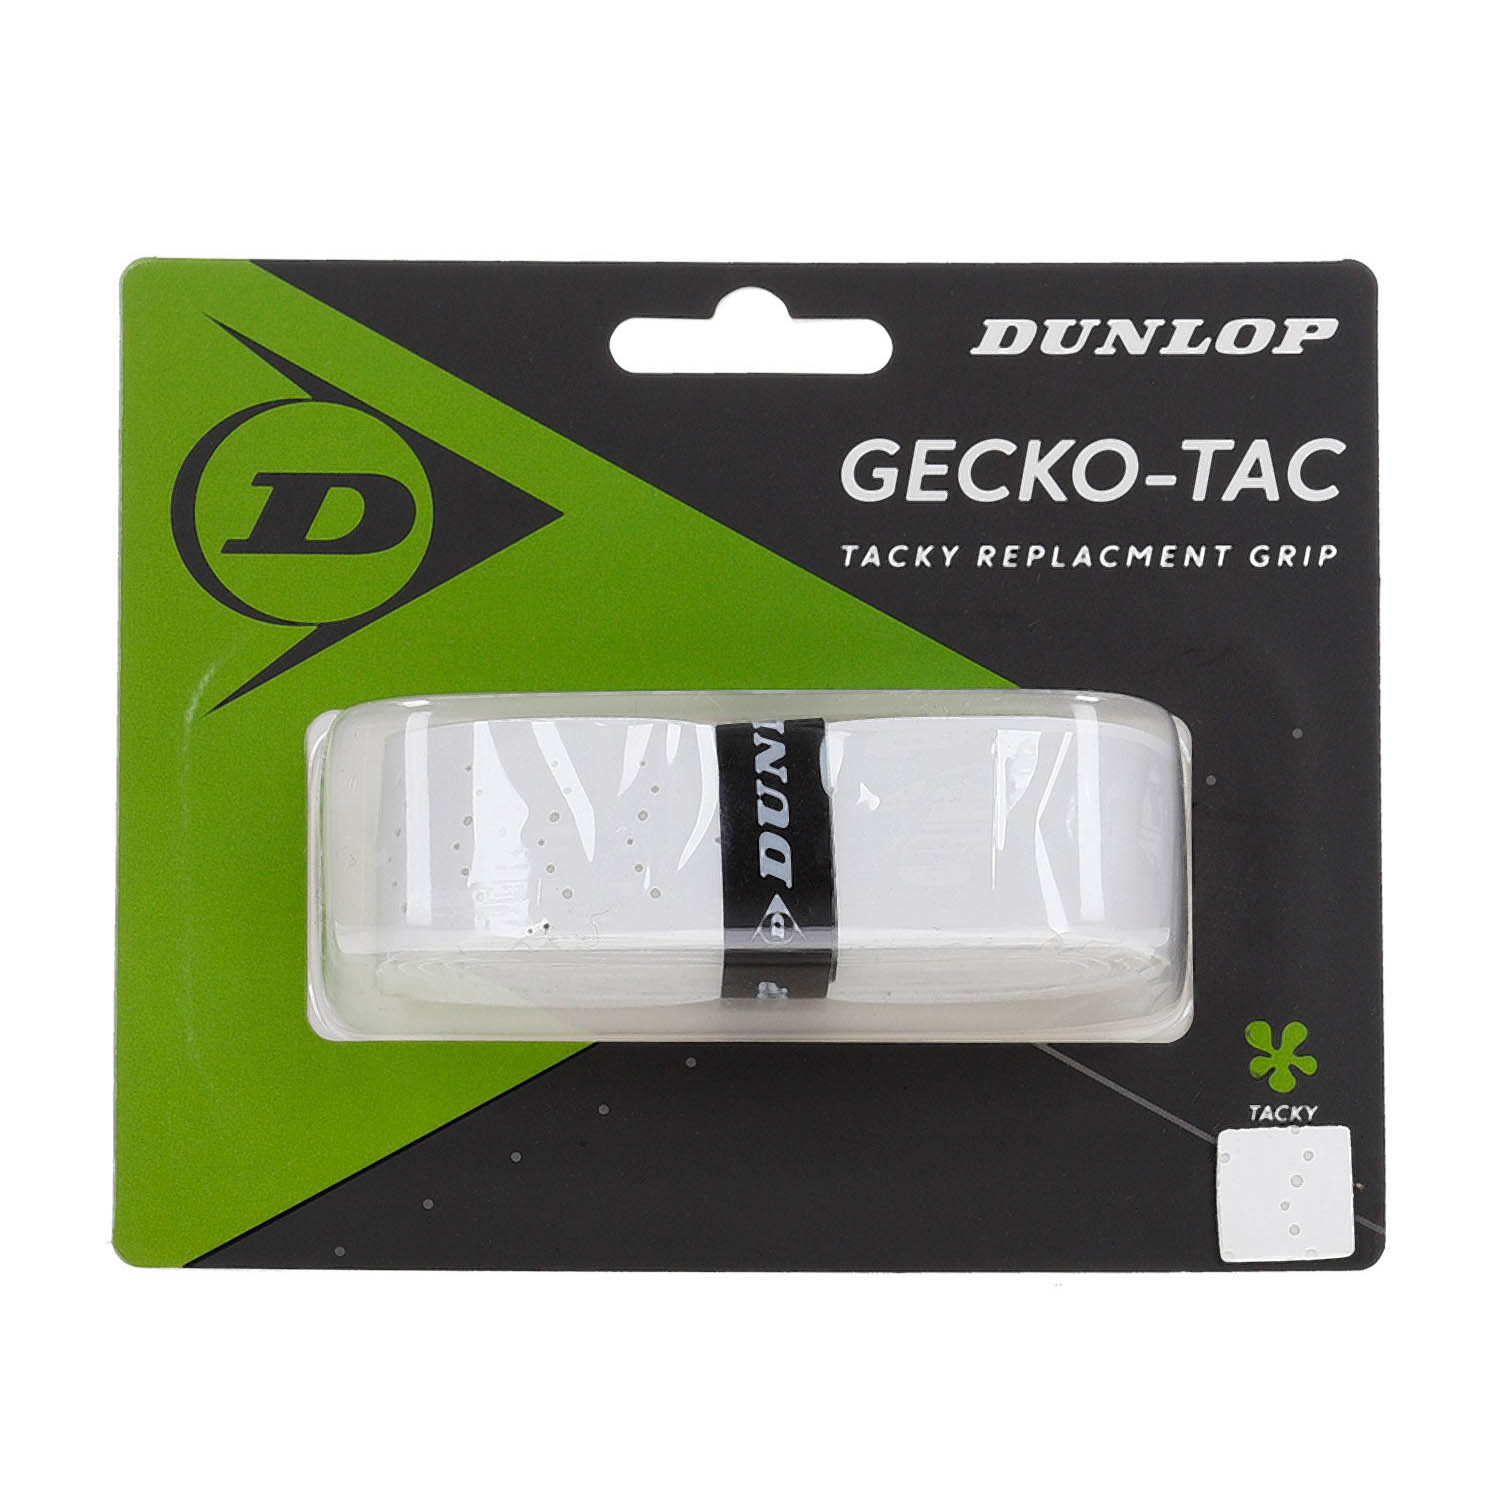 Dunlop Gecko-Tac Grip - White